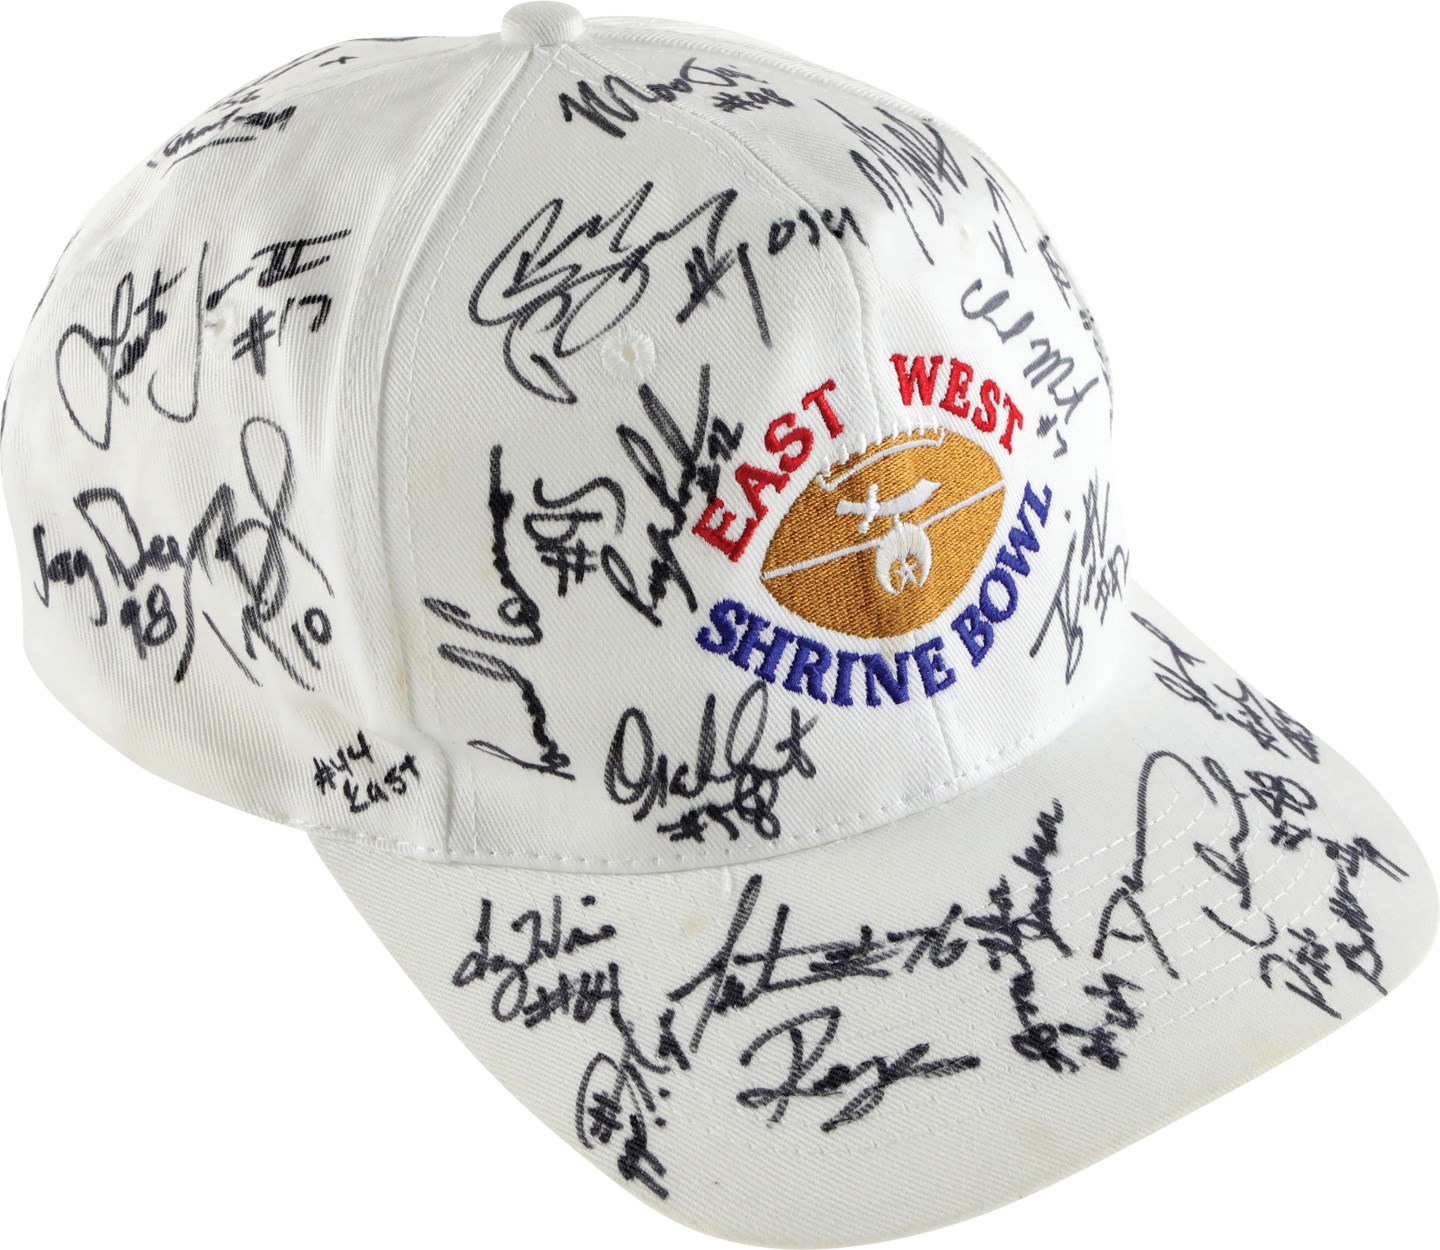 - 2000 Tom Brady College East vs. West Shrine Bowl Multi-Signed Hat (PSA)